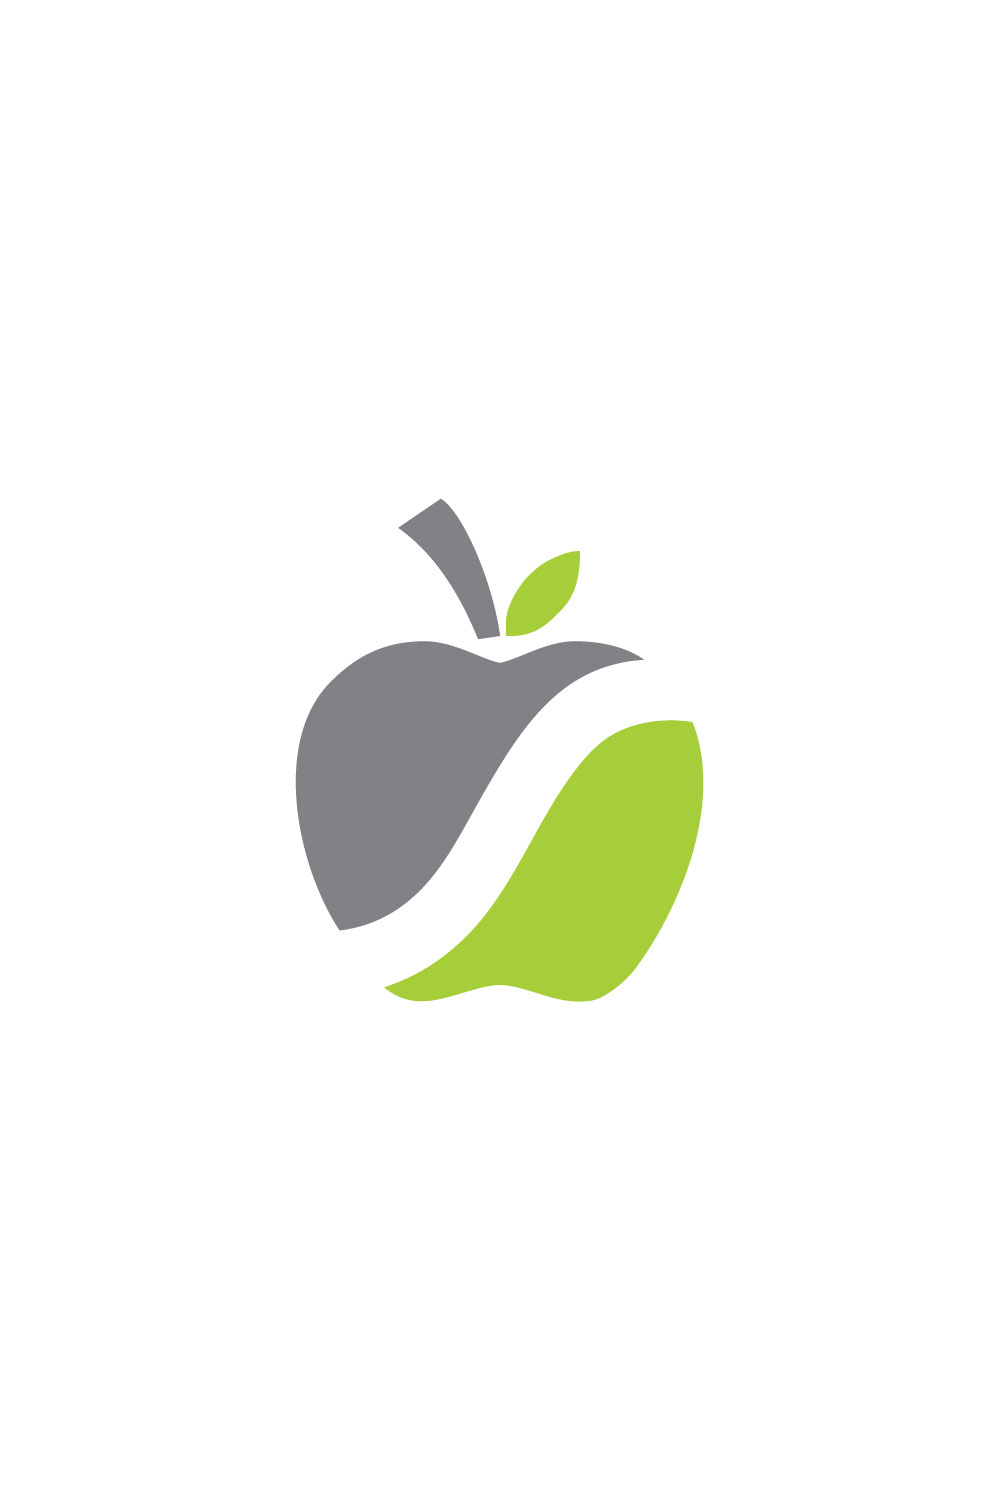 Apple Fruits Logo Vector pinterest image.